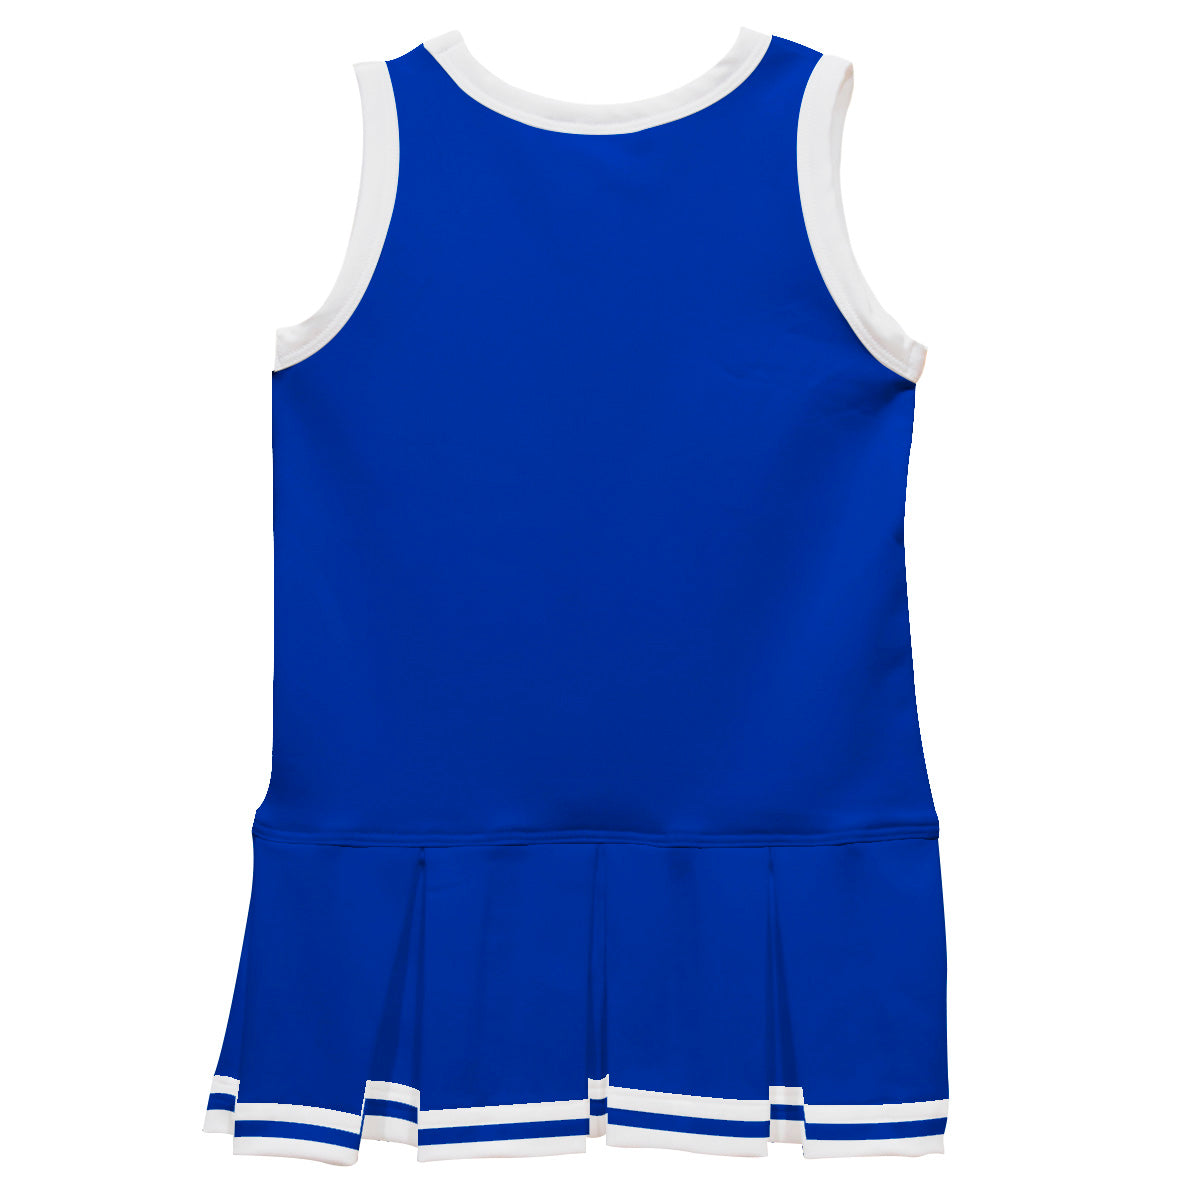 Navy & White Sleeveless Cheerleader Dress - Wimziy&Co.